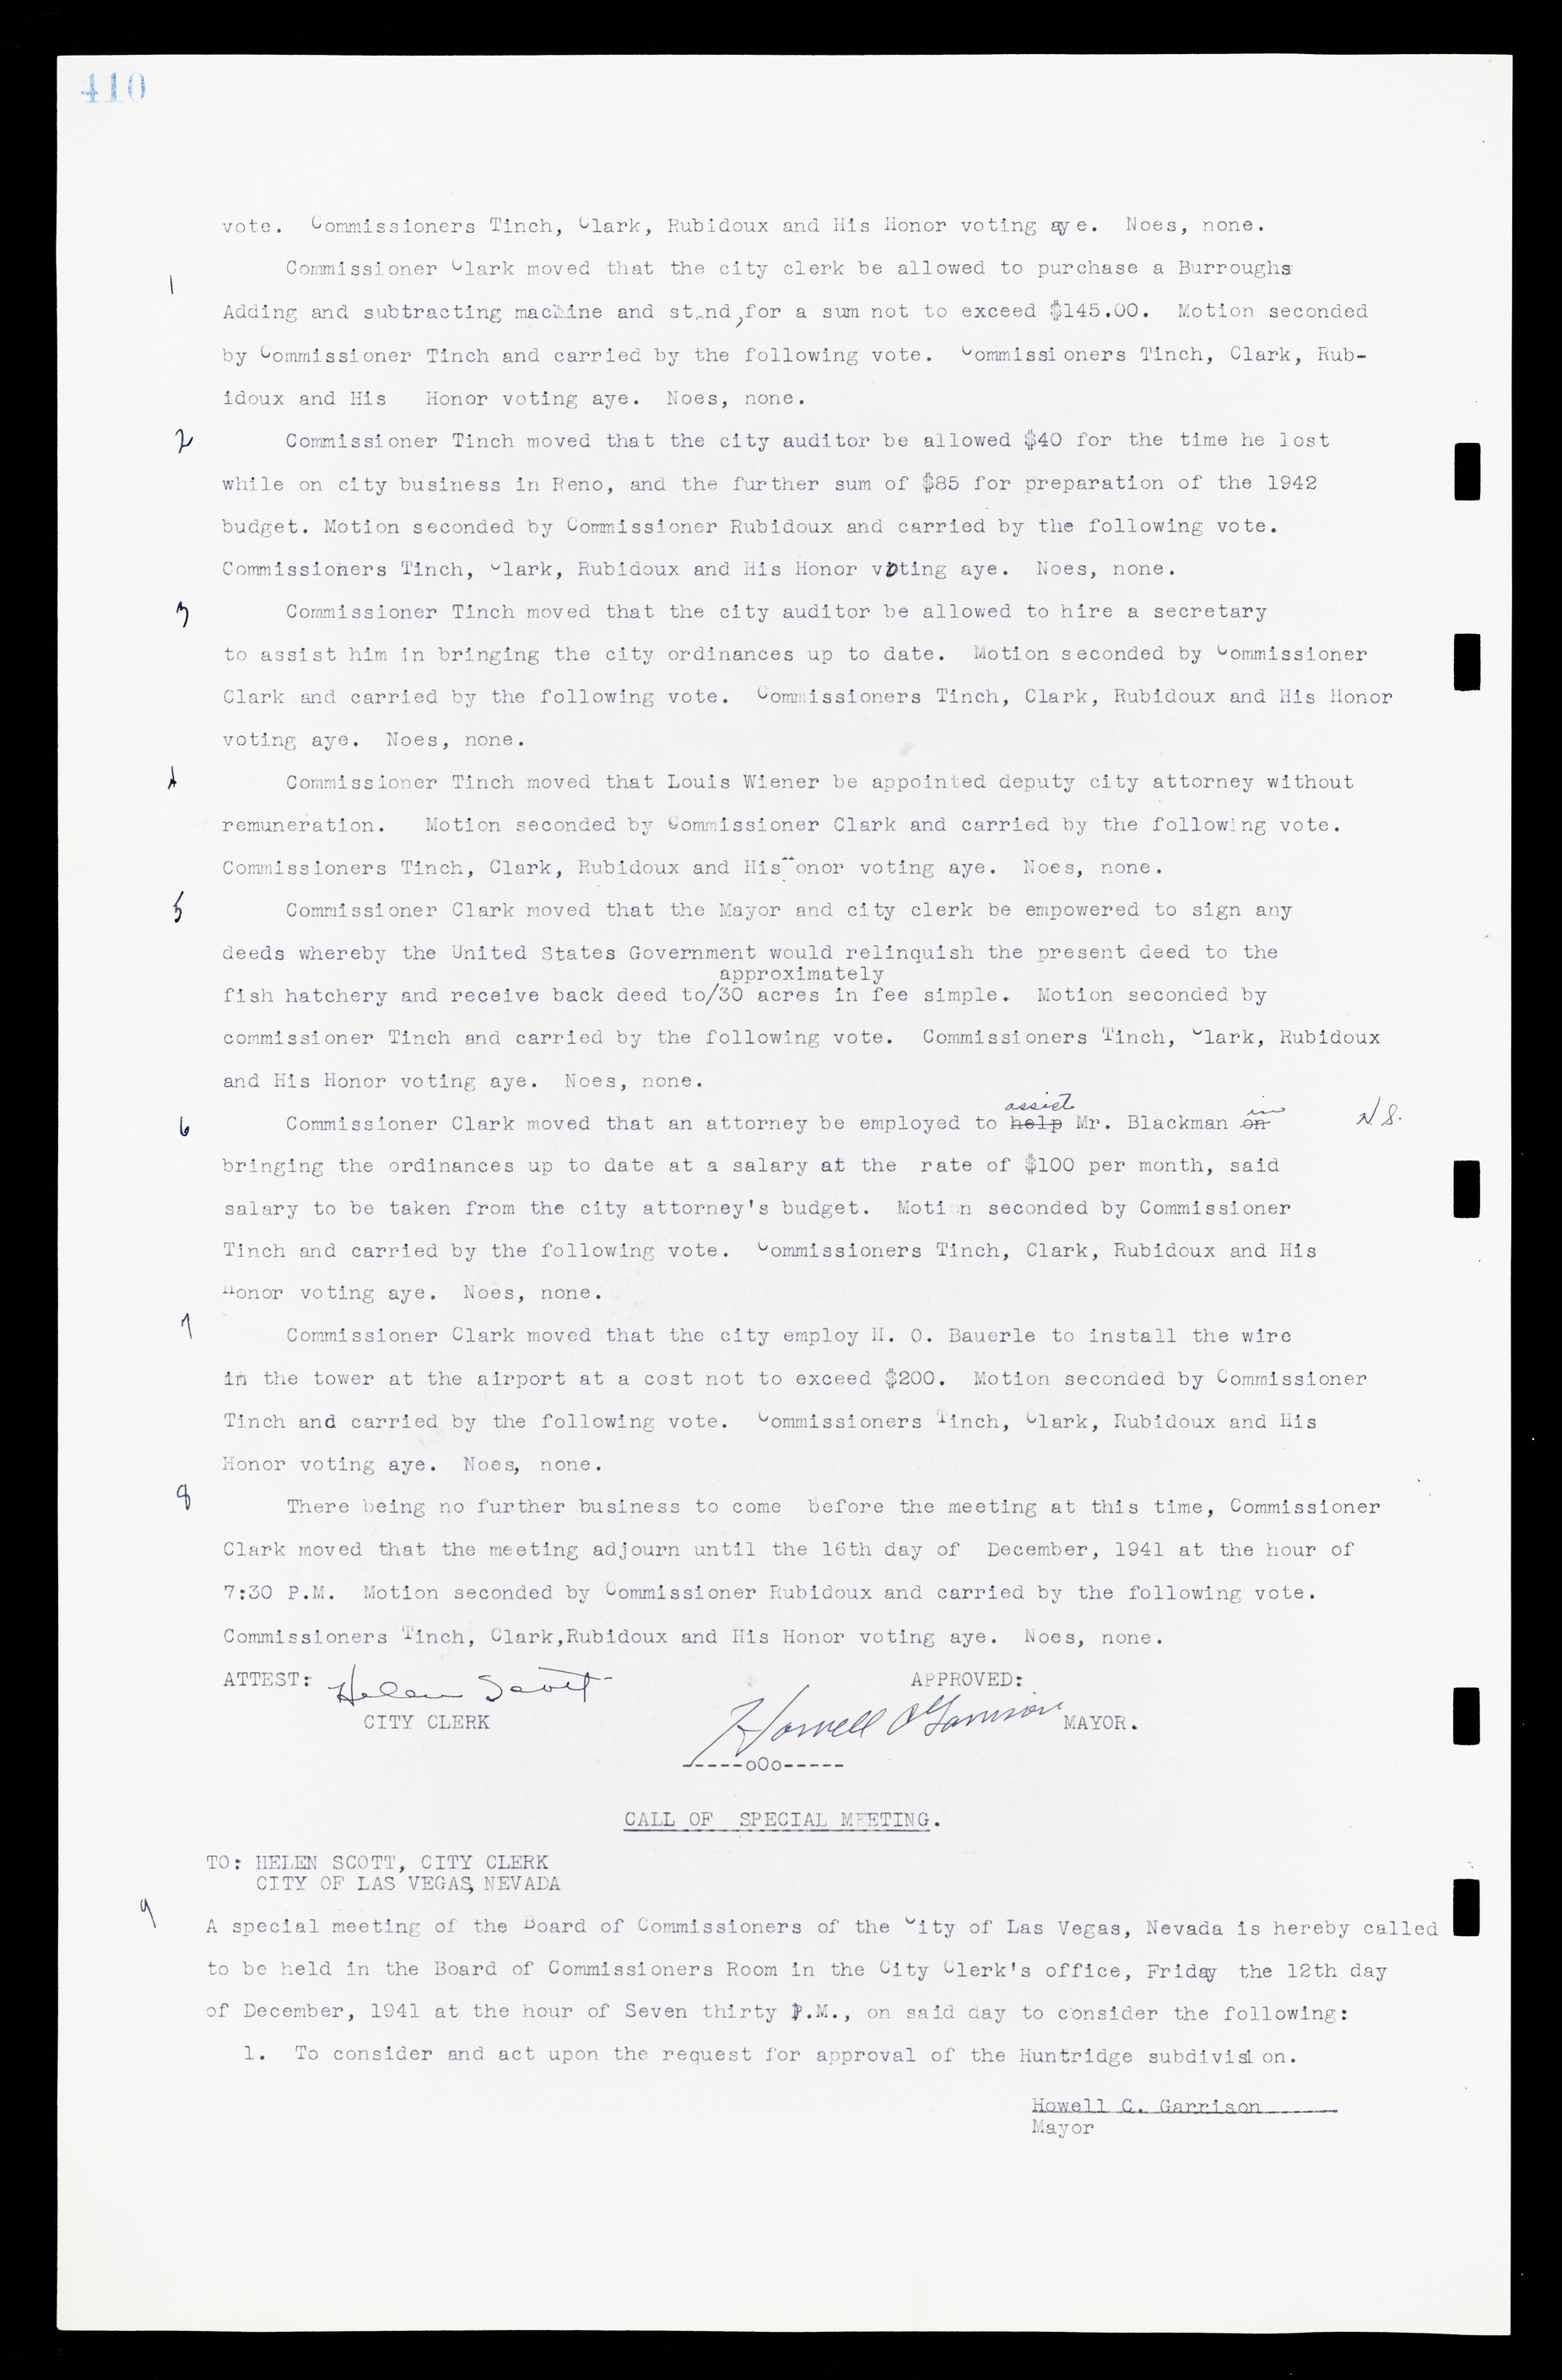 Las Vegas City Commission Minutes, February 17, 1937 to August 4, 1942, lvc000004-436